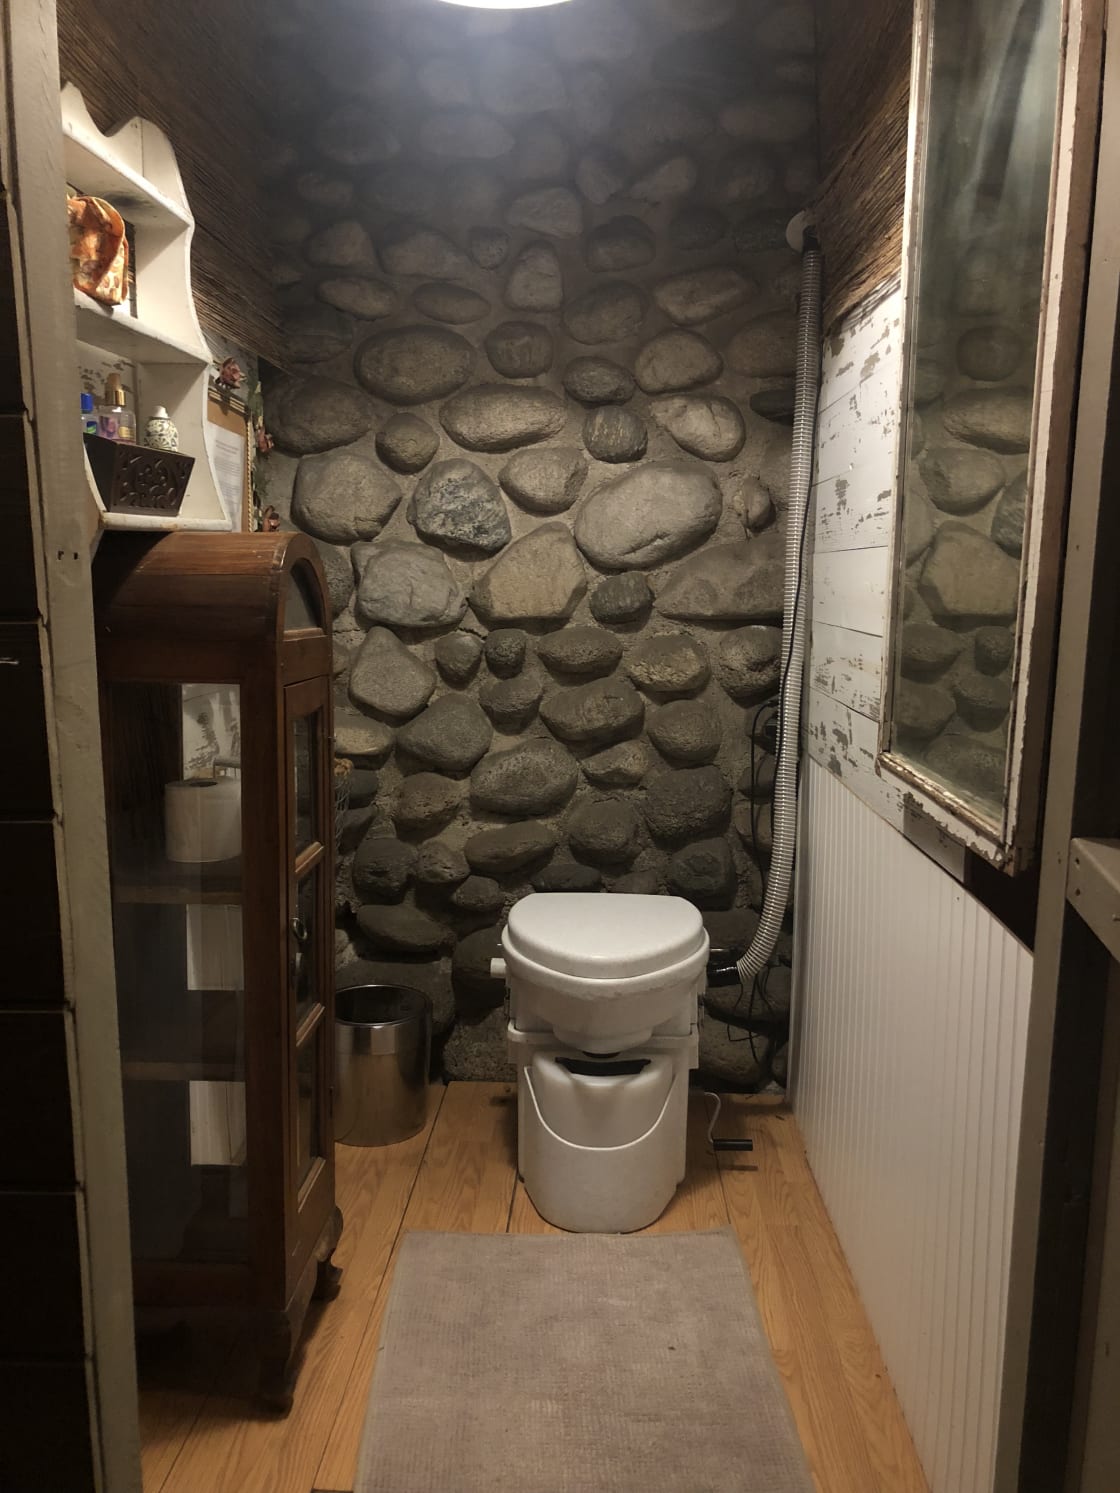 Compostible toilet/restroom